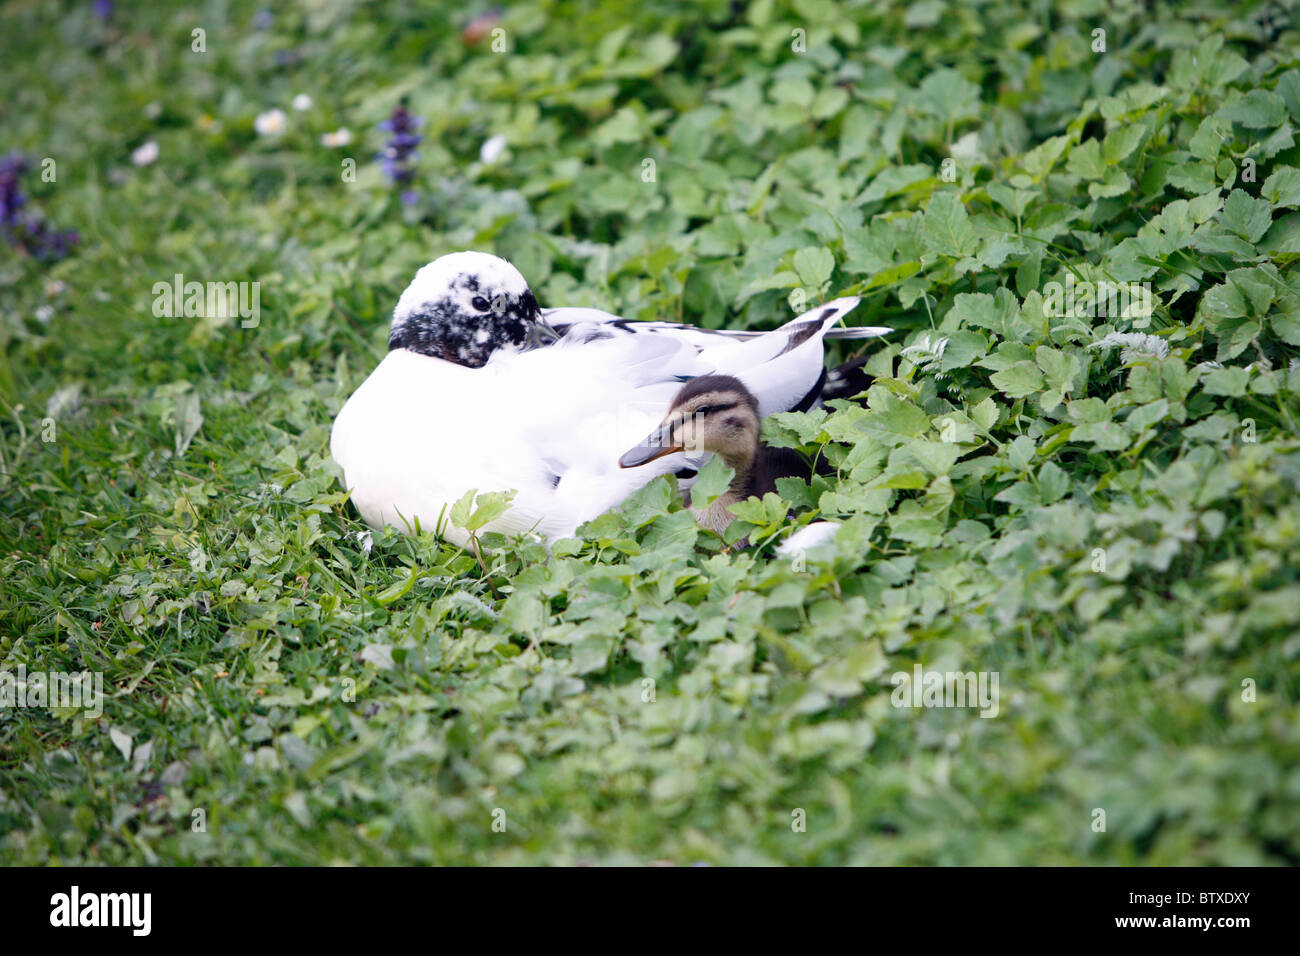 Mallard (Anas platyrhynchos), duck with semi-albino plumage, with duckling, Germany Stock Photo